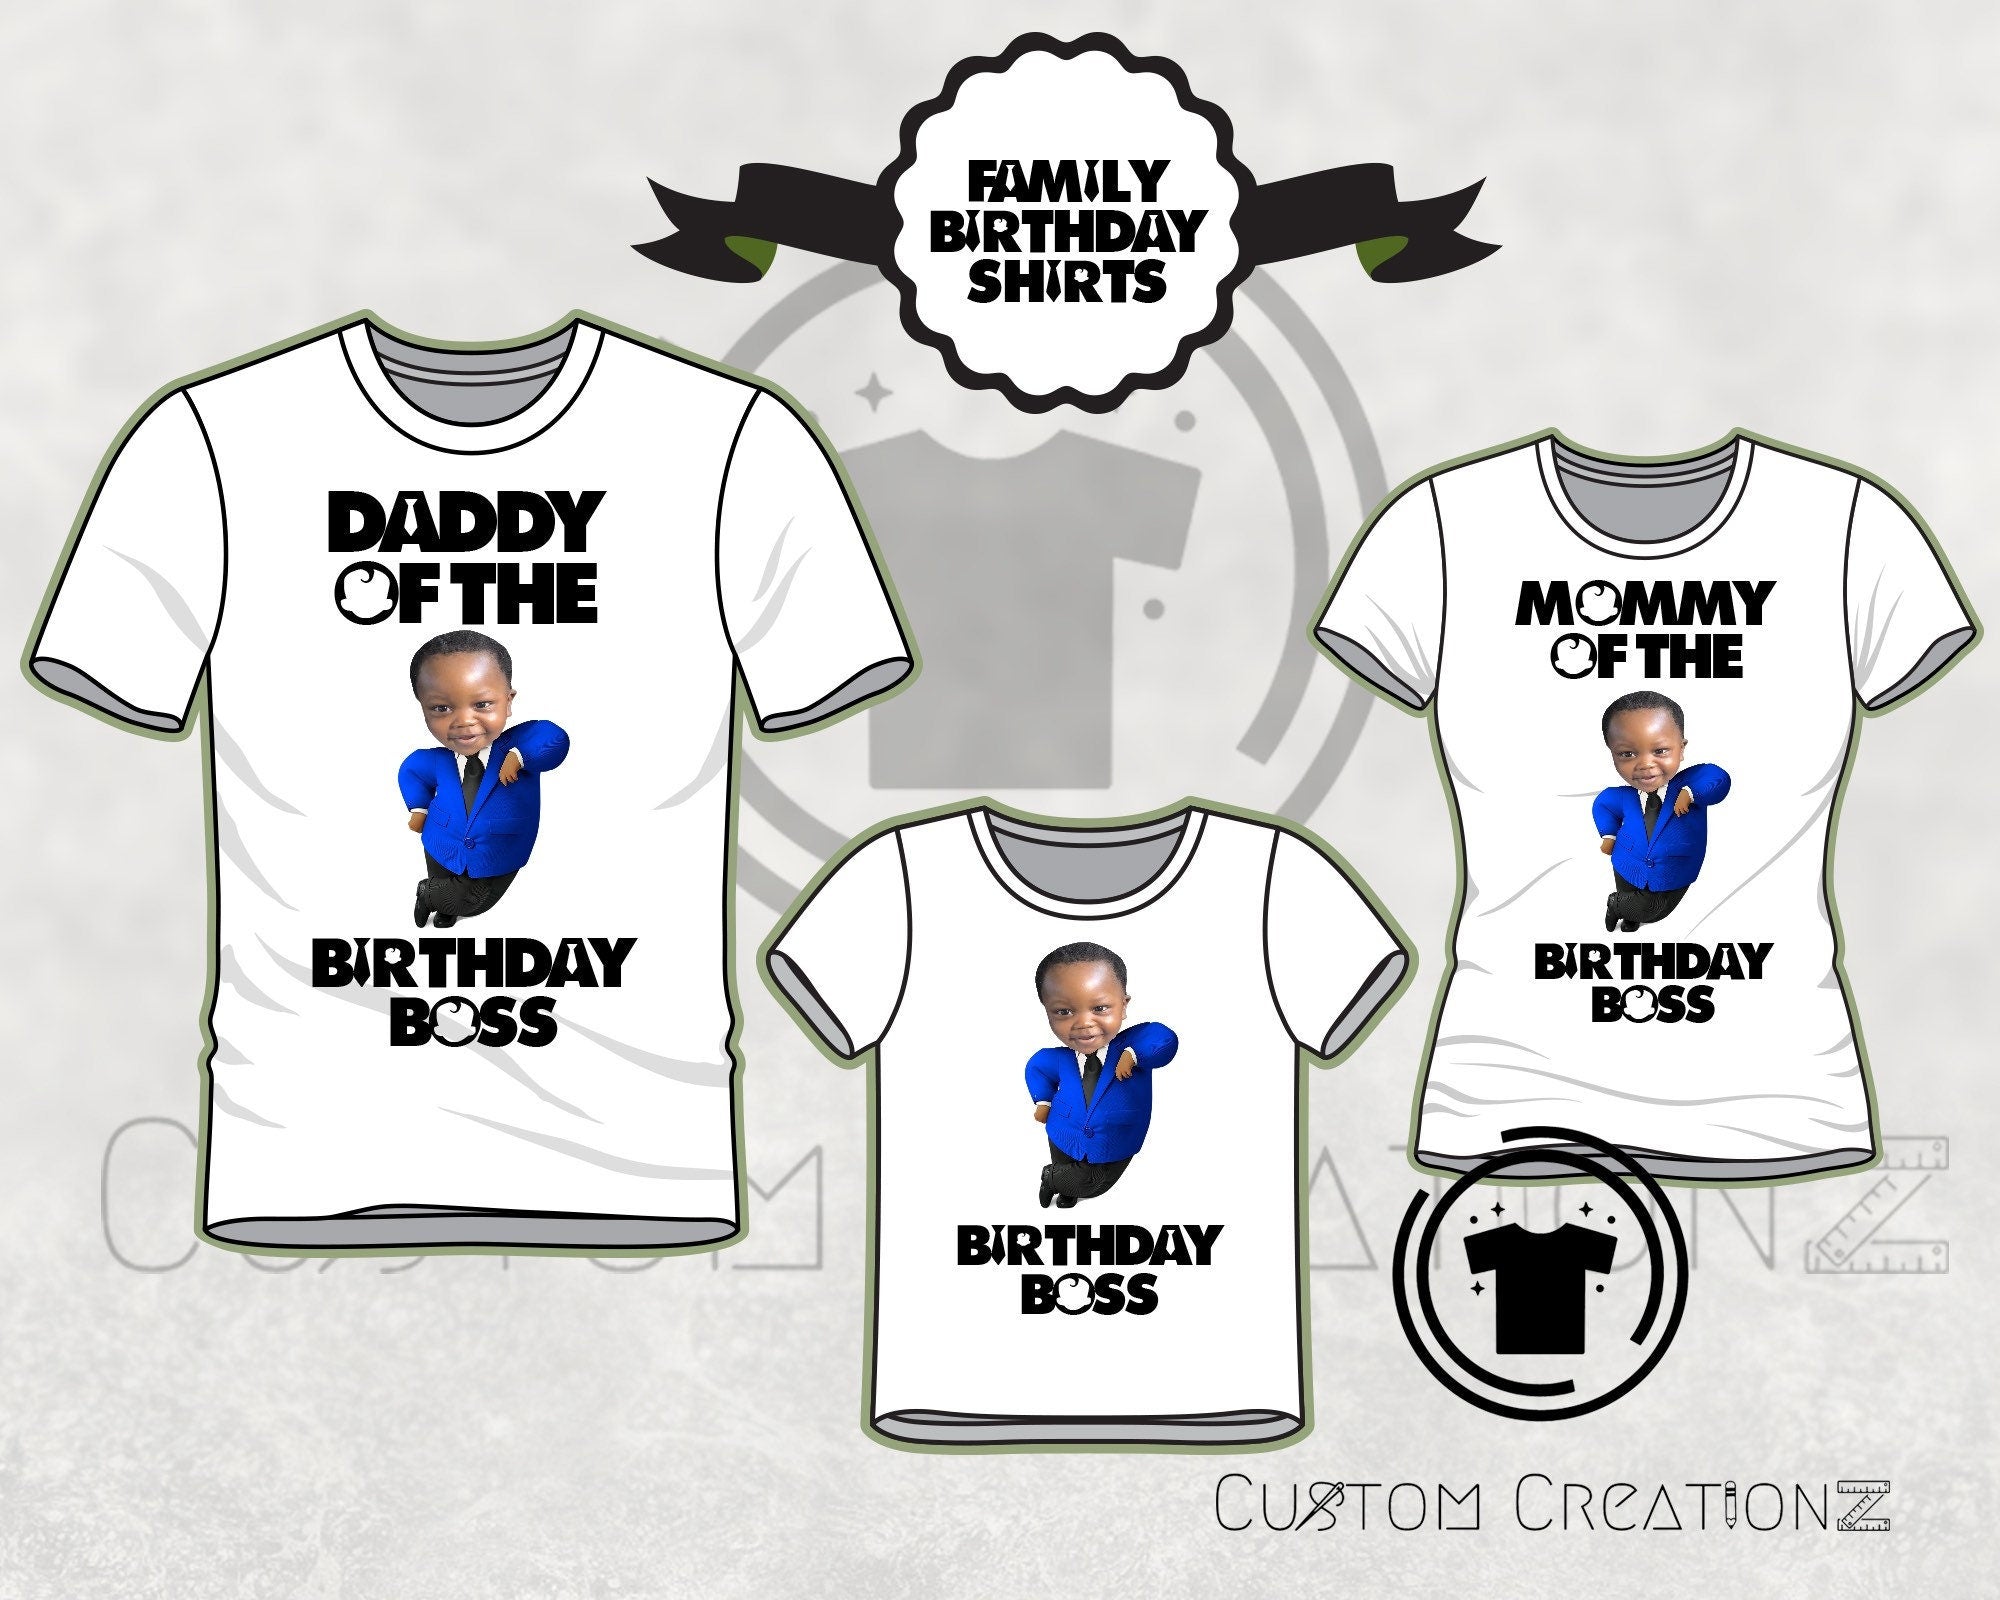 Birthday Boss Custom shirts